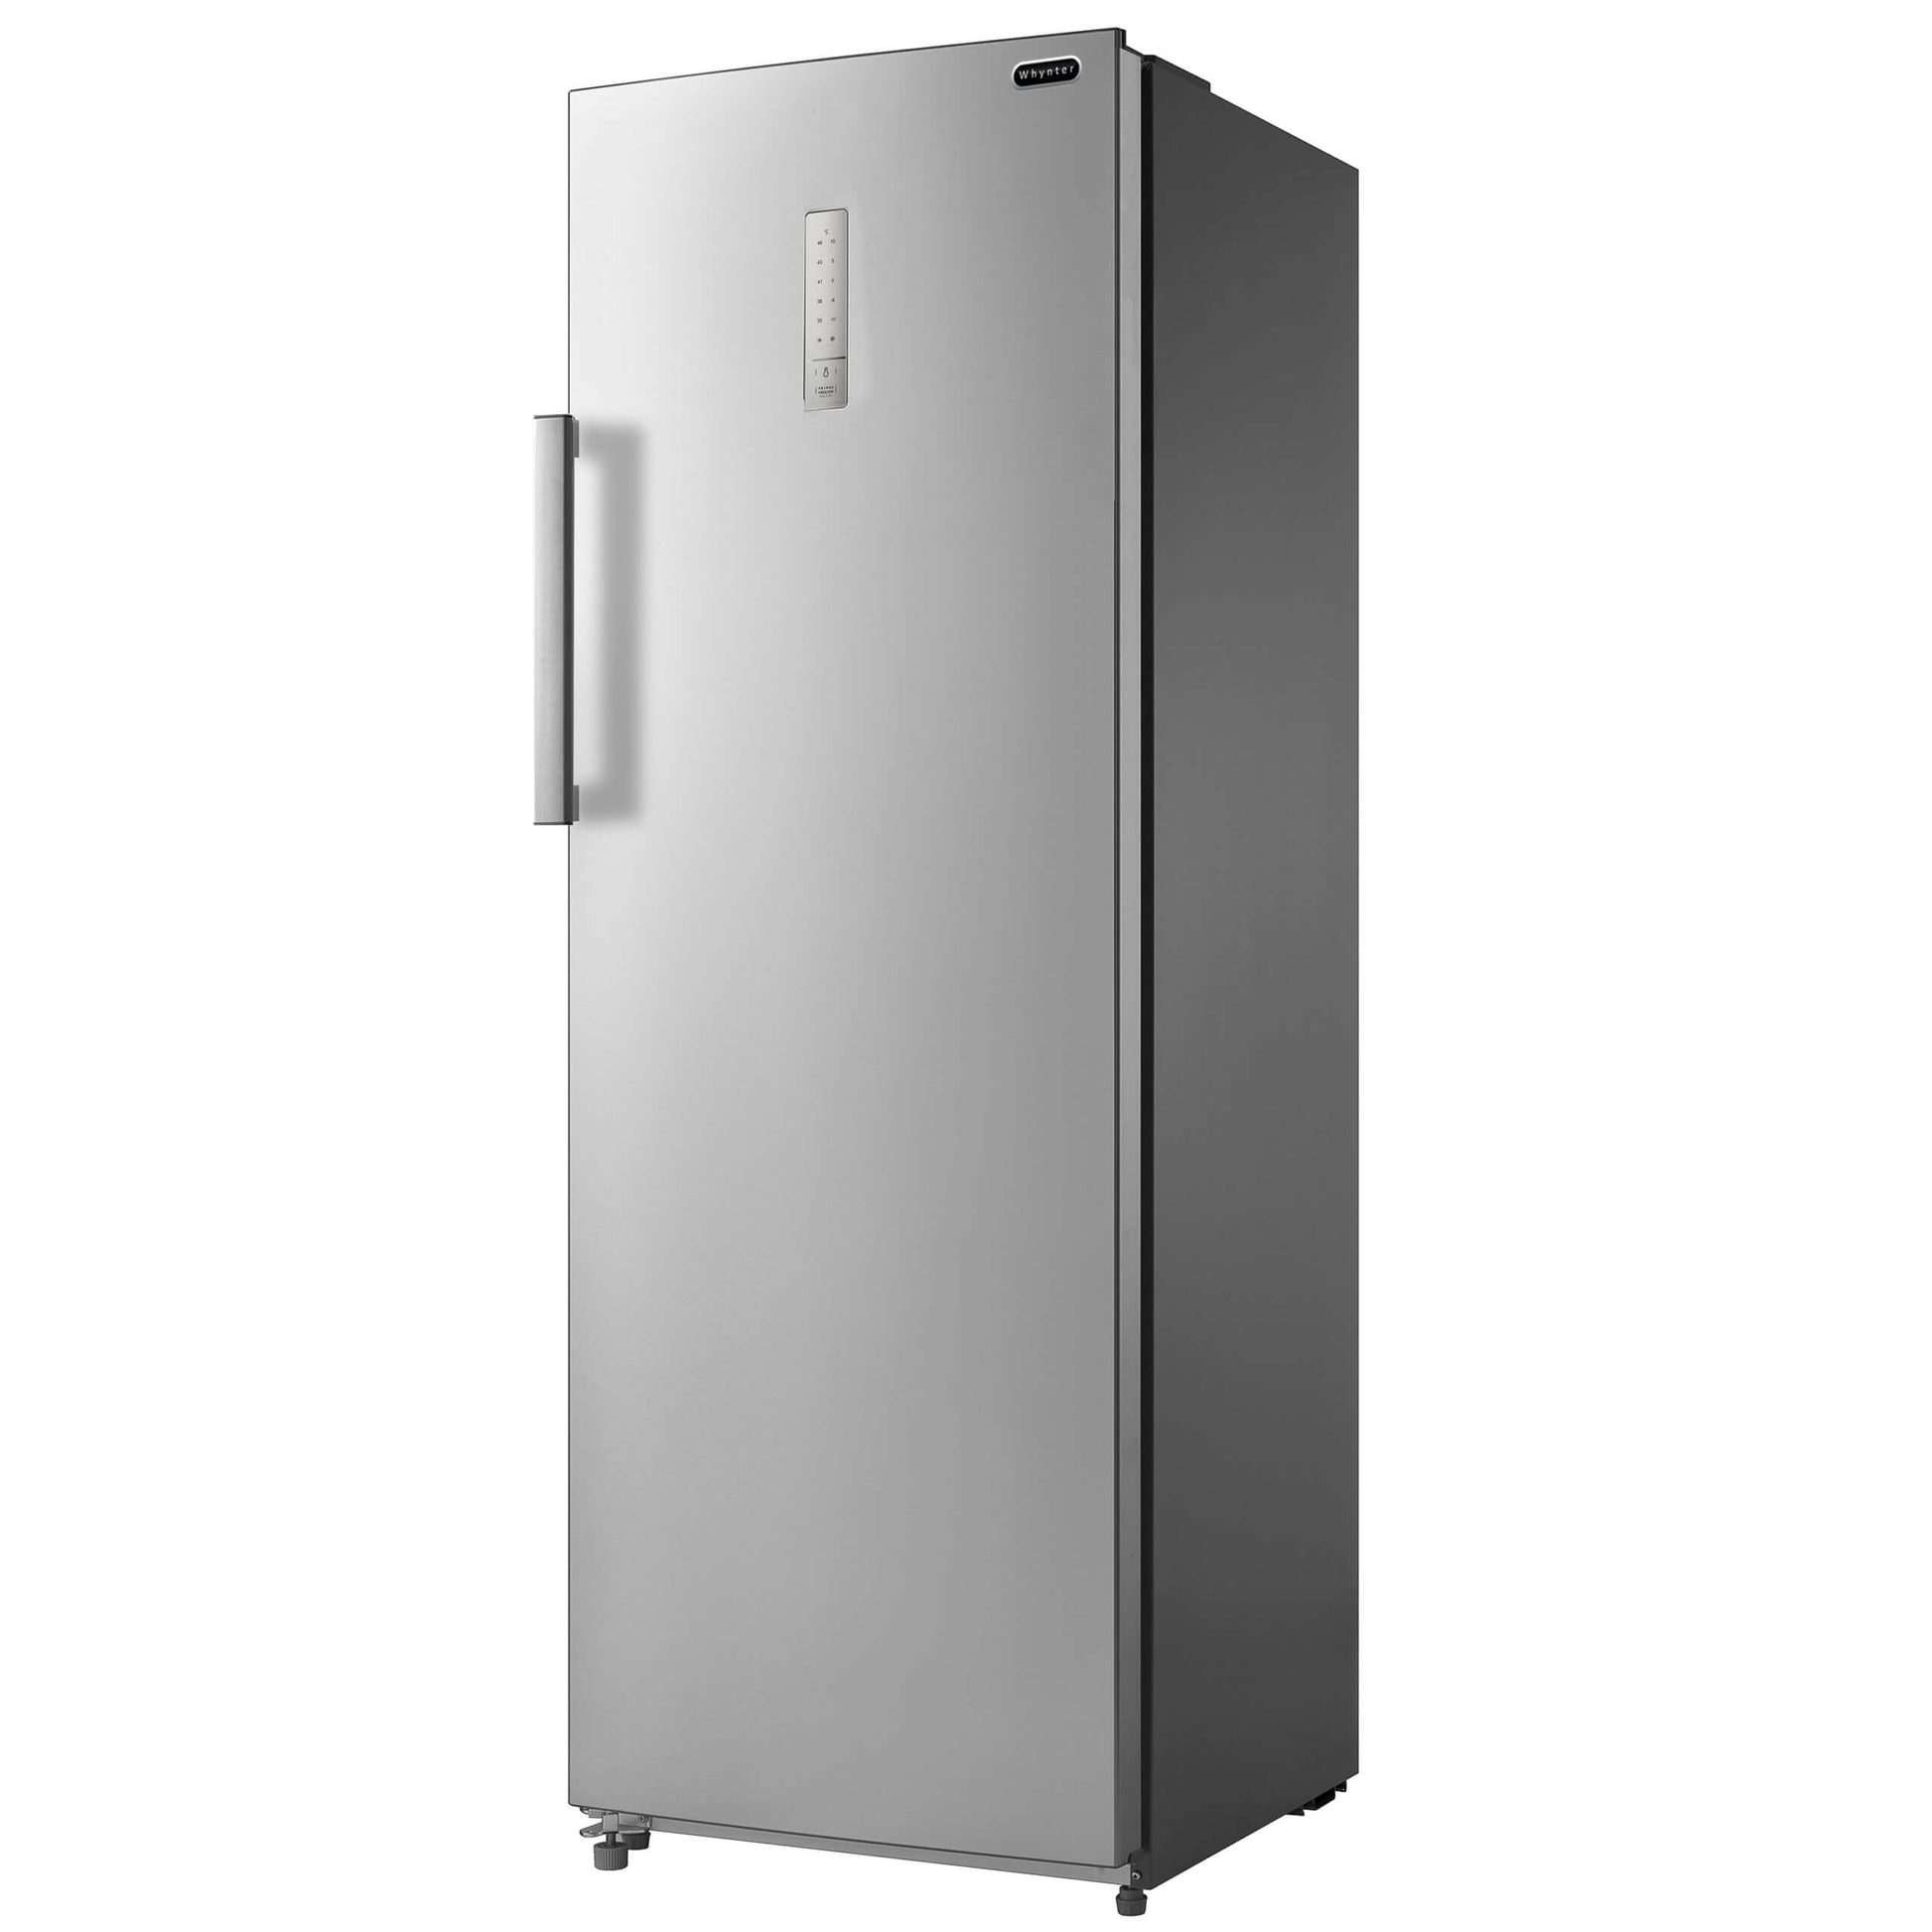 Whynter Compact Freezer / Refrigerators Whynter UDF-0831SS/UDF-0831SSa 8.3 cu.ft. Energy Star Digital Upright Stainless Steel Deep Freezer/Refrigerator